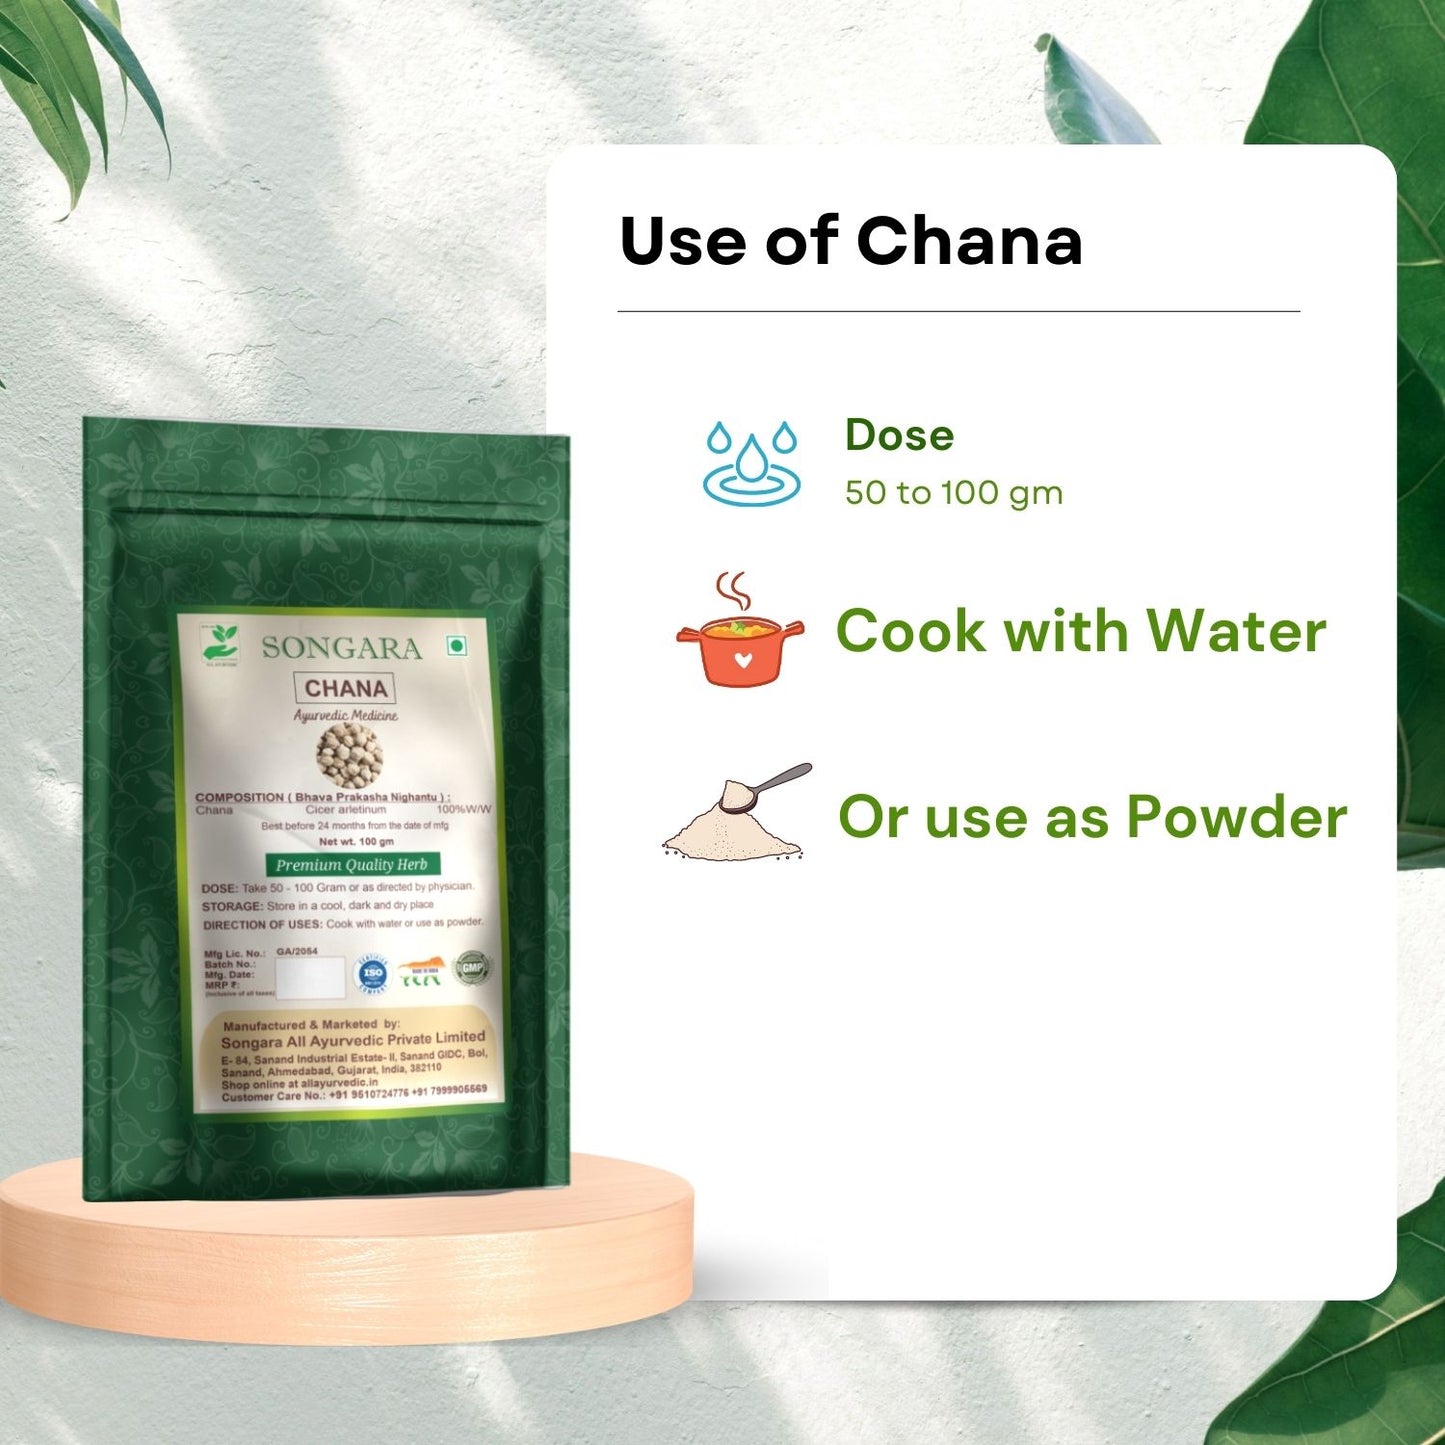 Songara Chana (Besan): (Cicer arietinum) Rich in Protein, No Cholesterol, No Additives, Pure, Natural, Herbal Chana 100gm, (1 Unit)